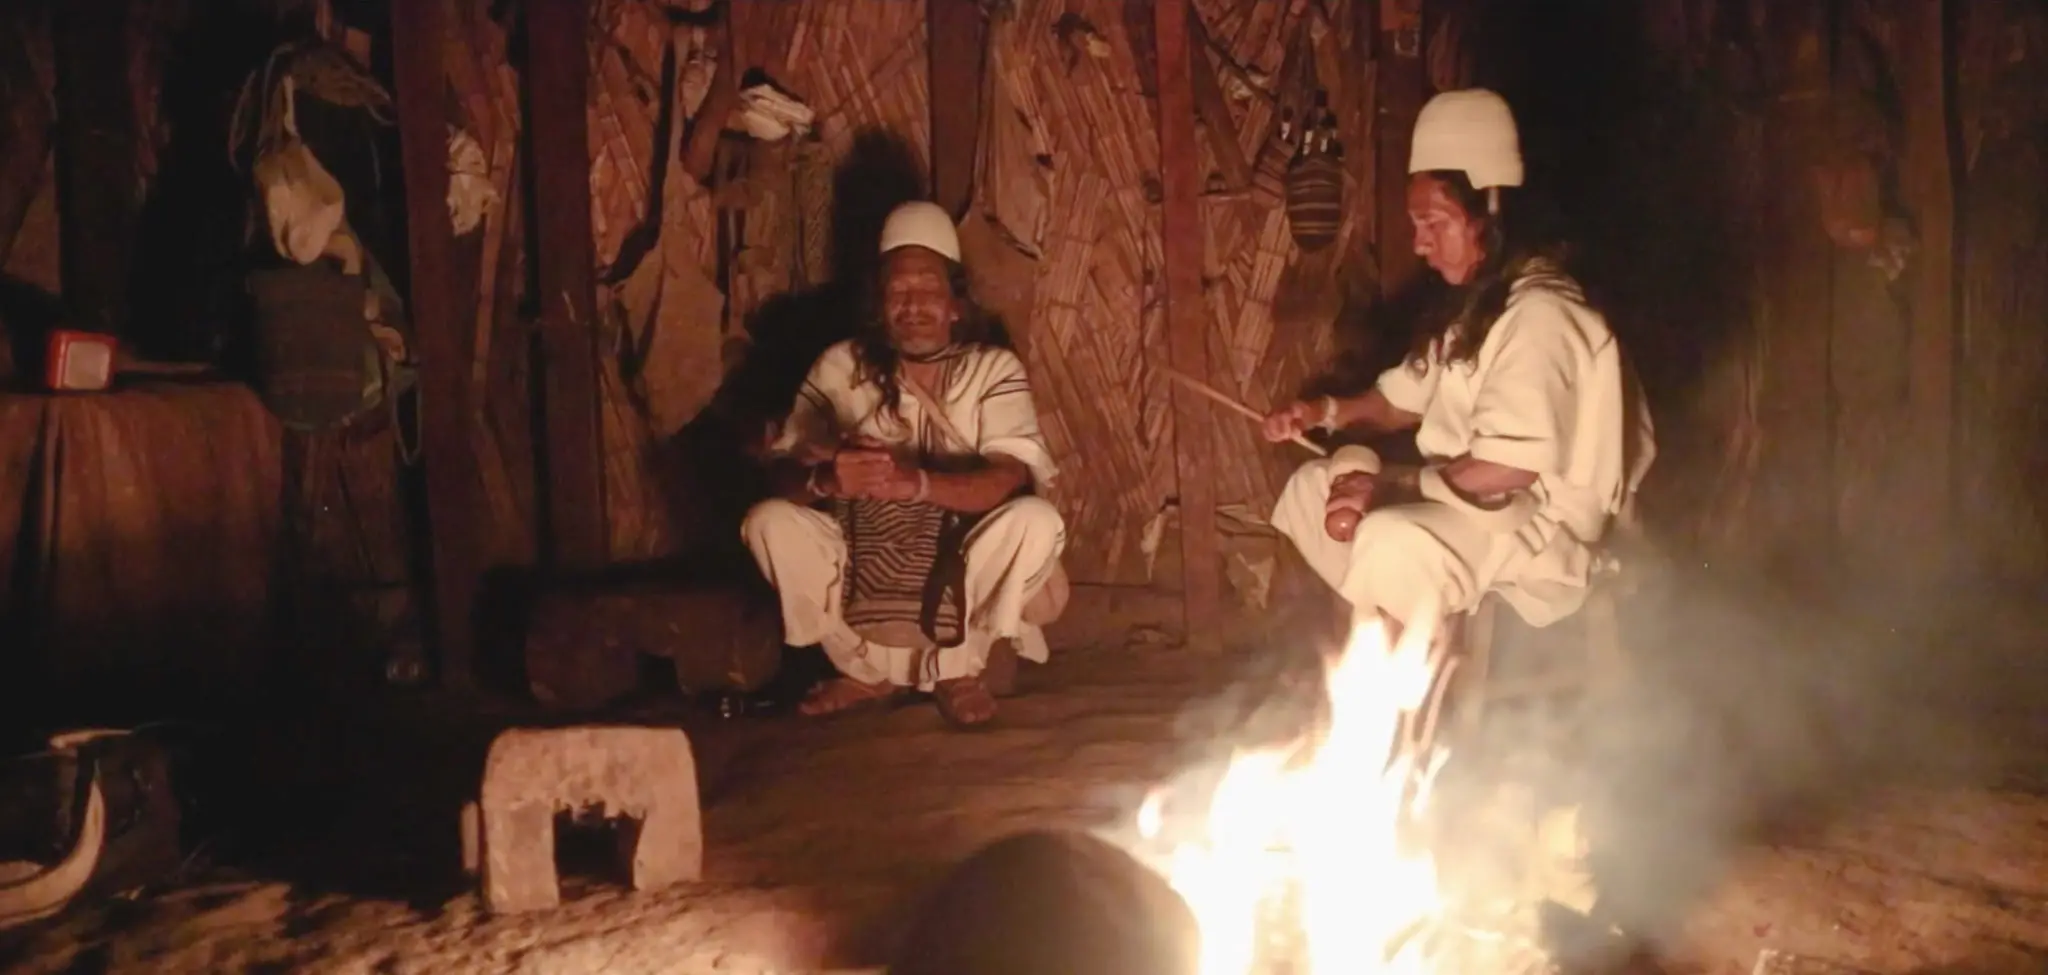 Arhuaco communicators work over a fire